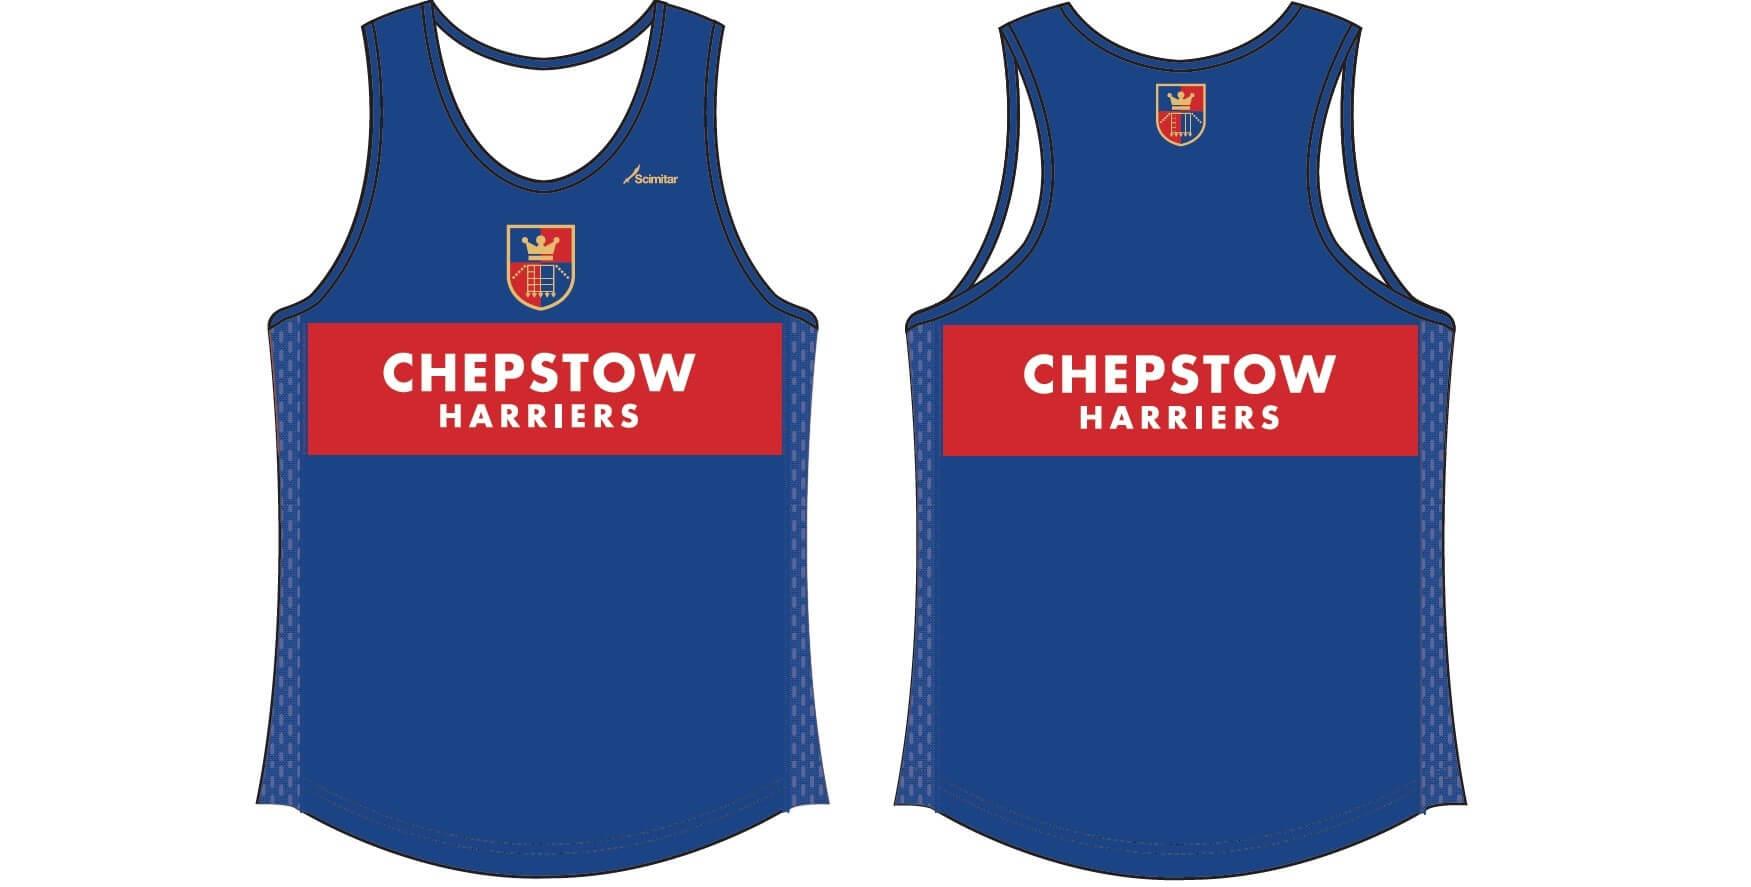 Chepstow Harriers